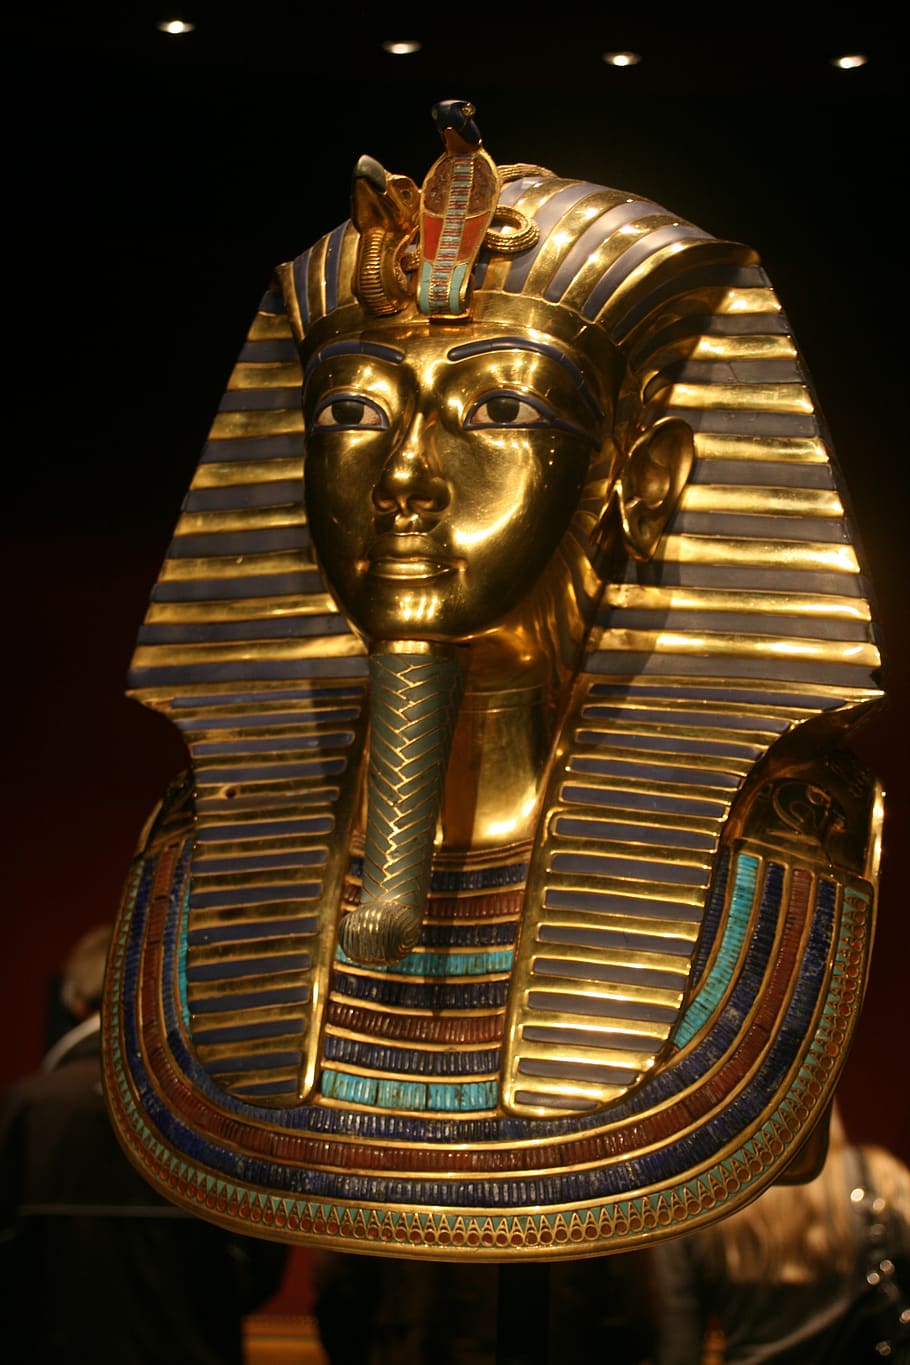 pharaonic, tutankhamun, egypt, golden, burial chamber, gold mask, mask, egyptian museum, valuable, death mask